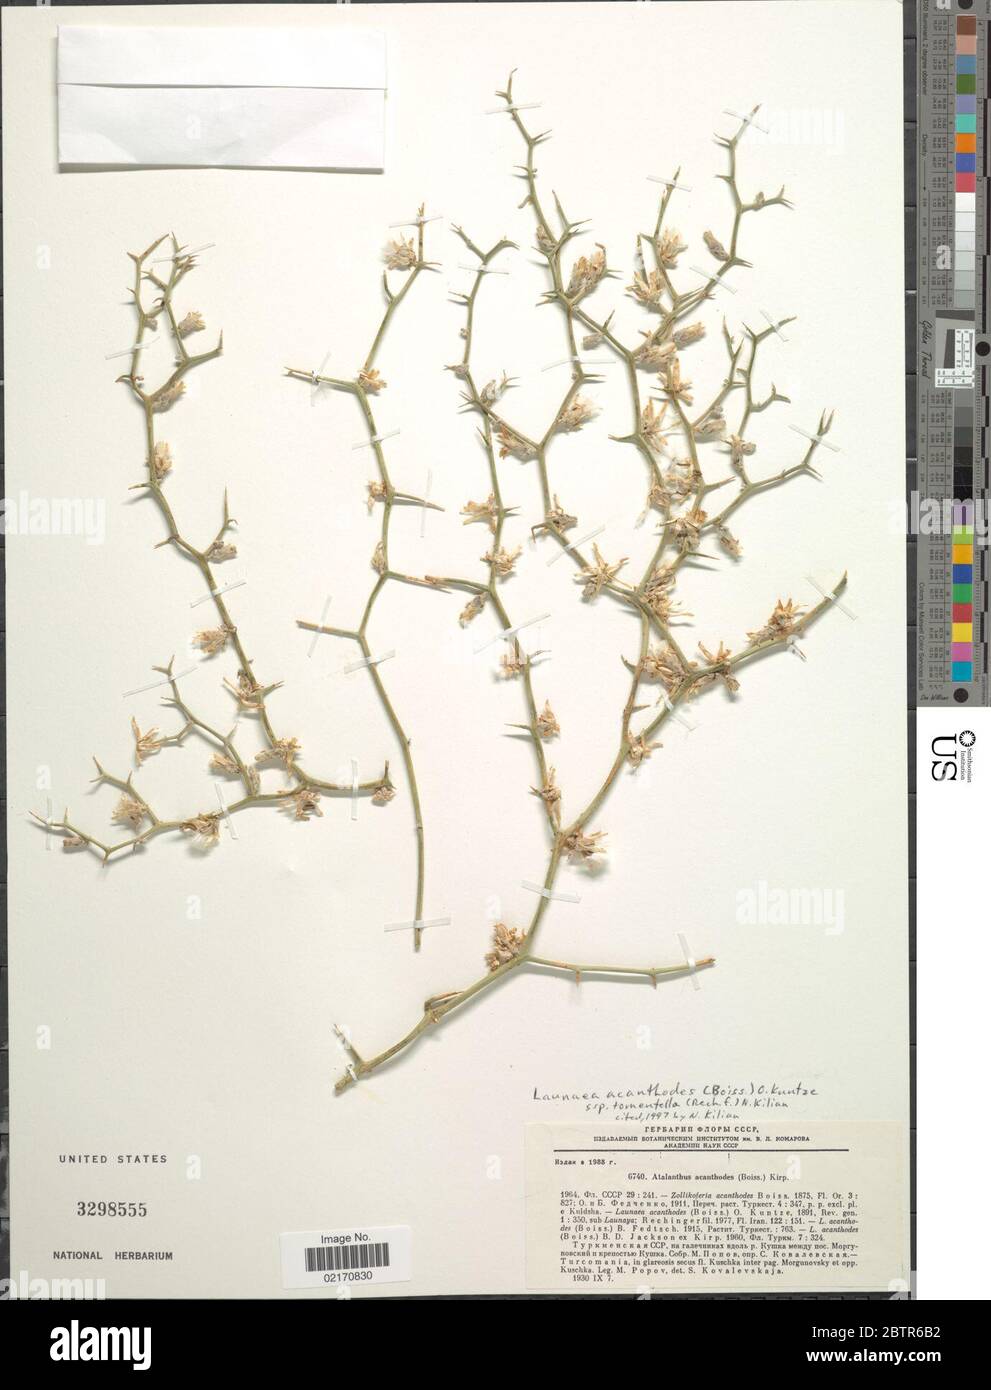 Launaea acanthodes subsp tomentella Rech f N Kilian. Stock Photo